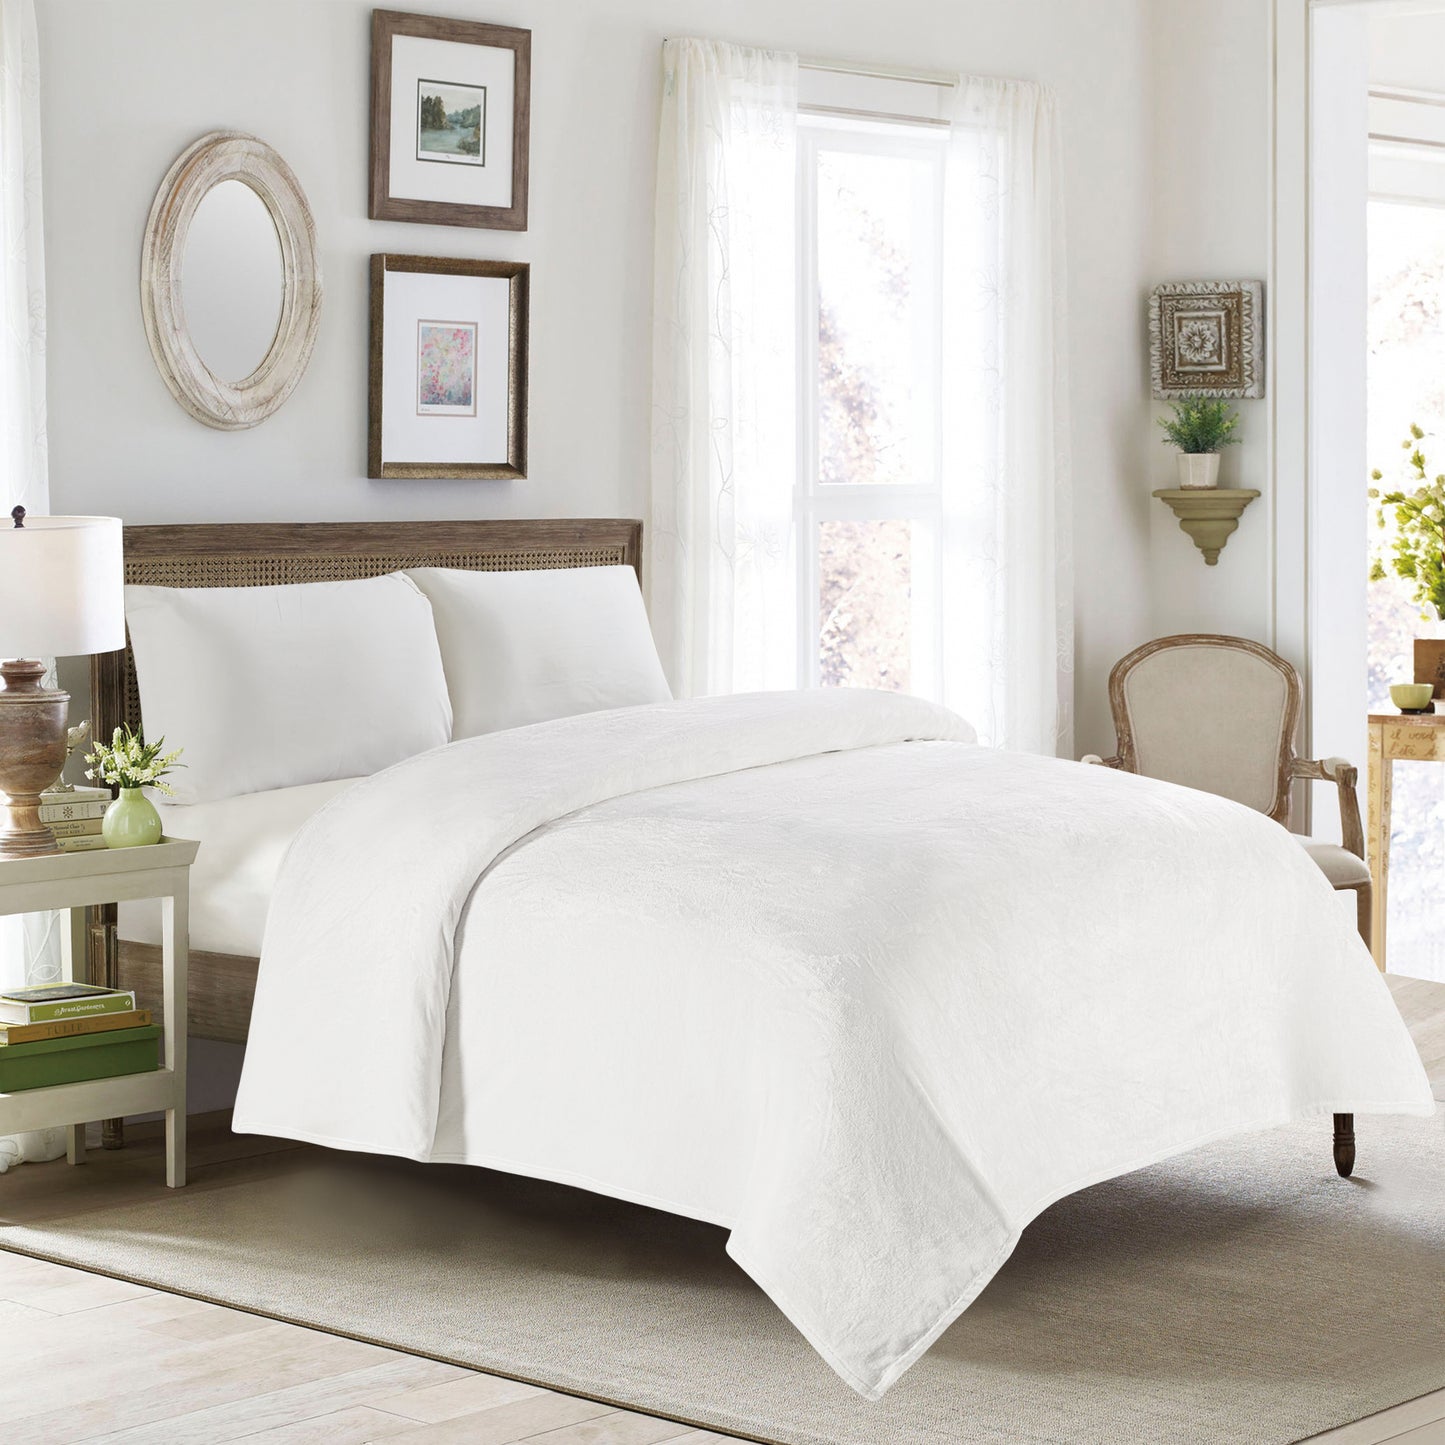 Classic Solid Fleece Blanket - White